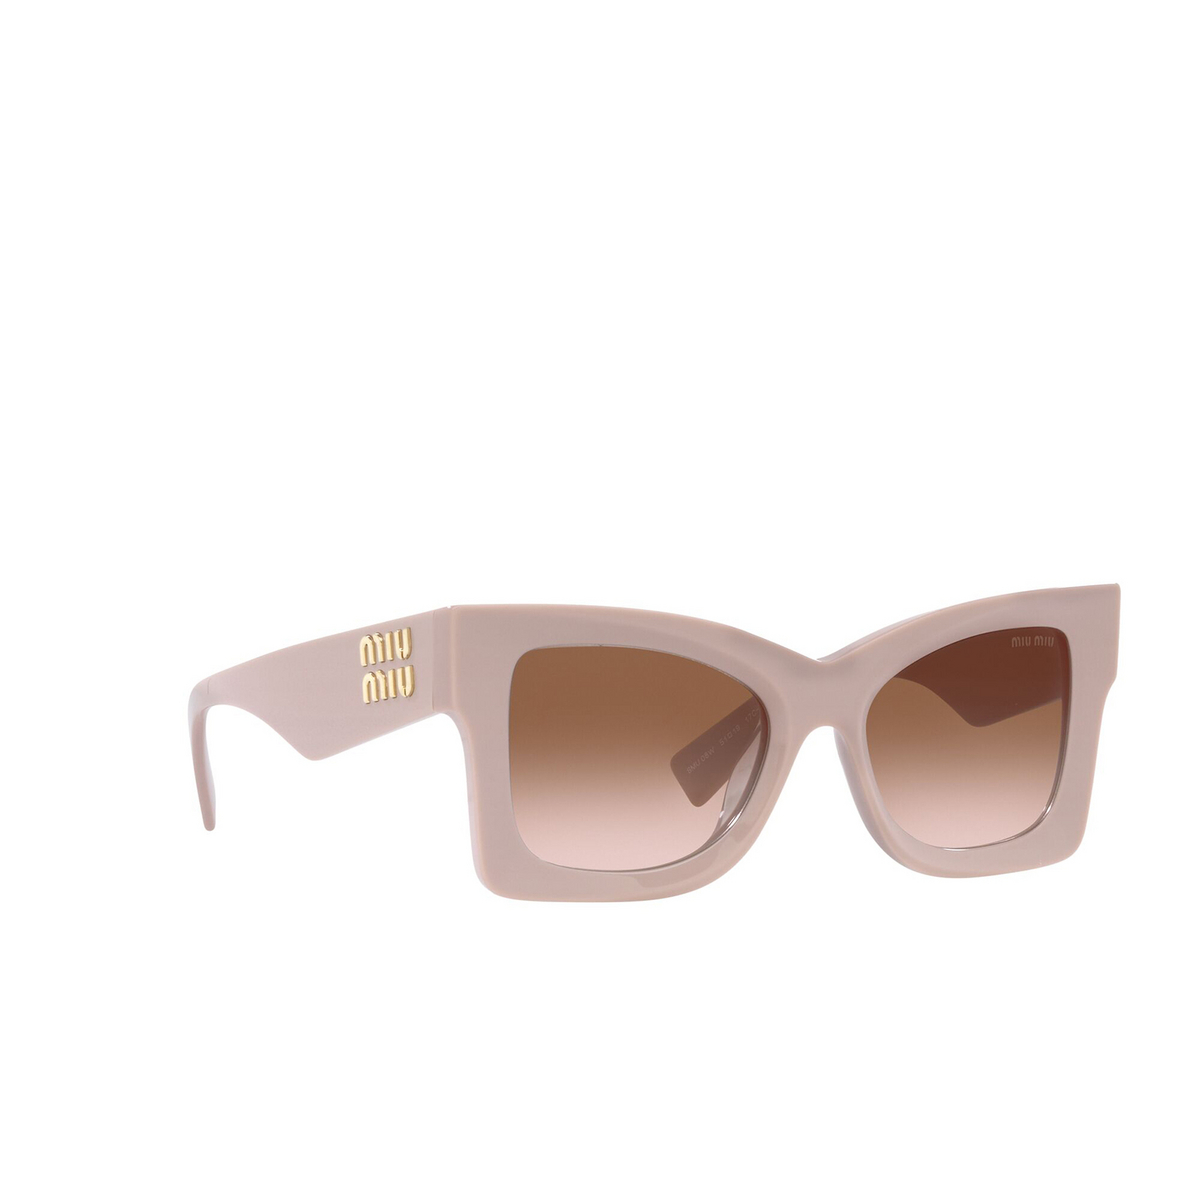 Miu Miu® Butterfly Sunglasses: MU 08WS color Pink 17C0A6 - three-quarters view.